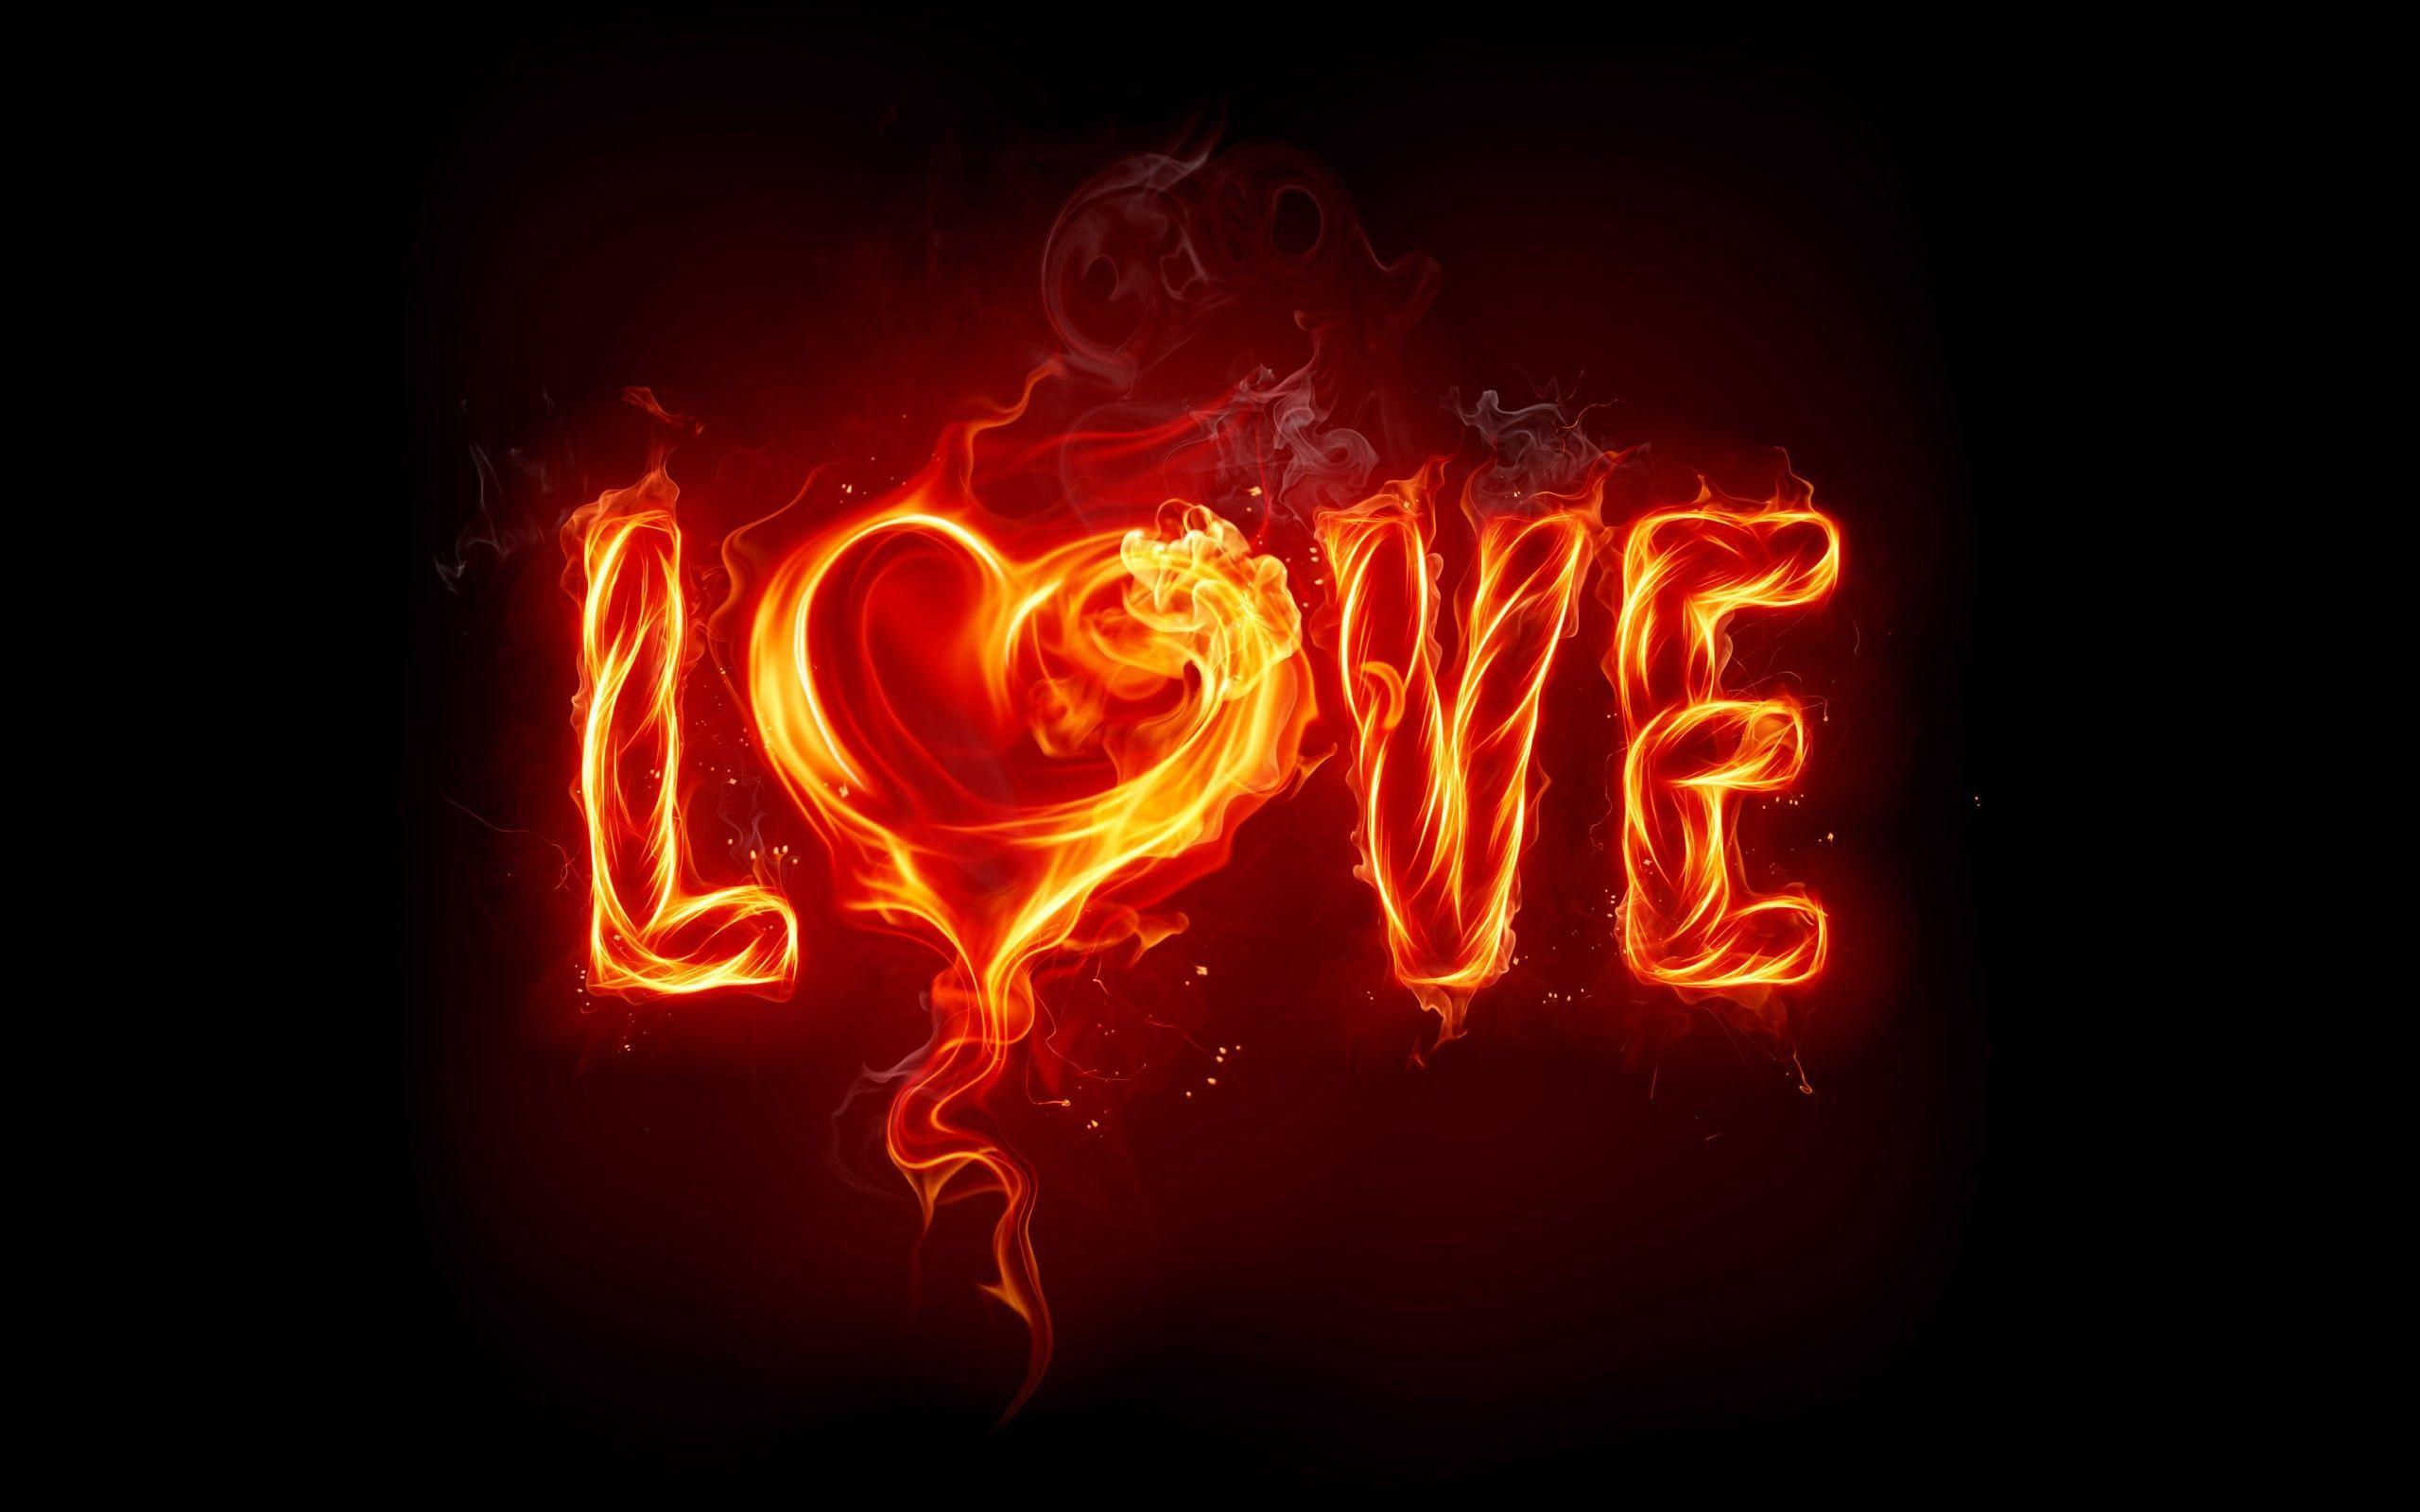 House Music Love On Fire Hd Jootix 2560x1600 298477 Wallpapers